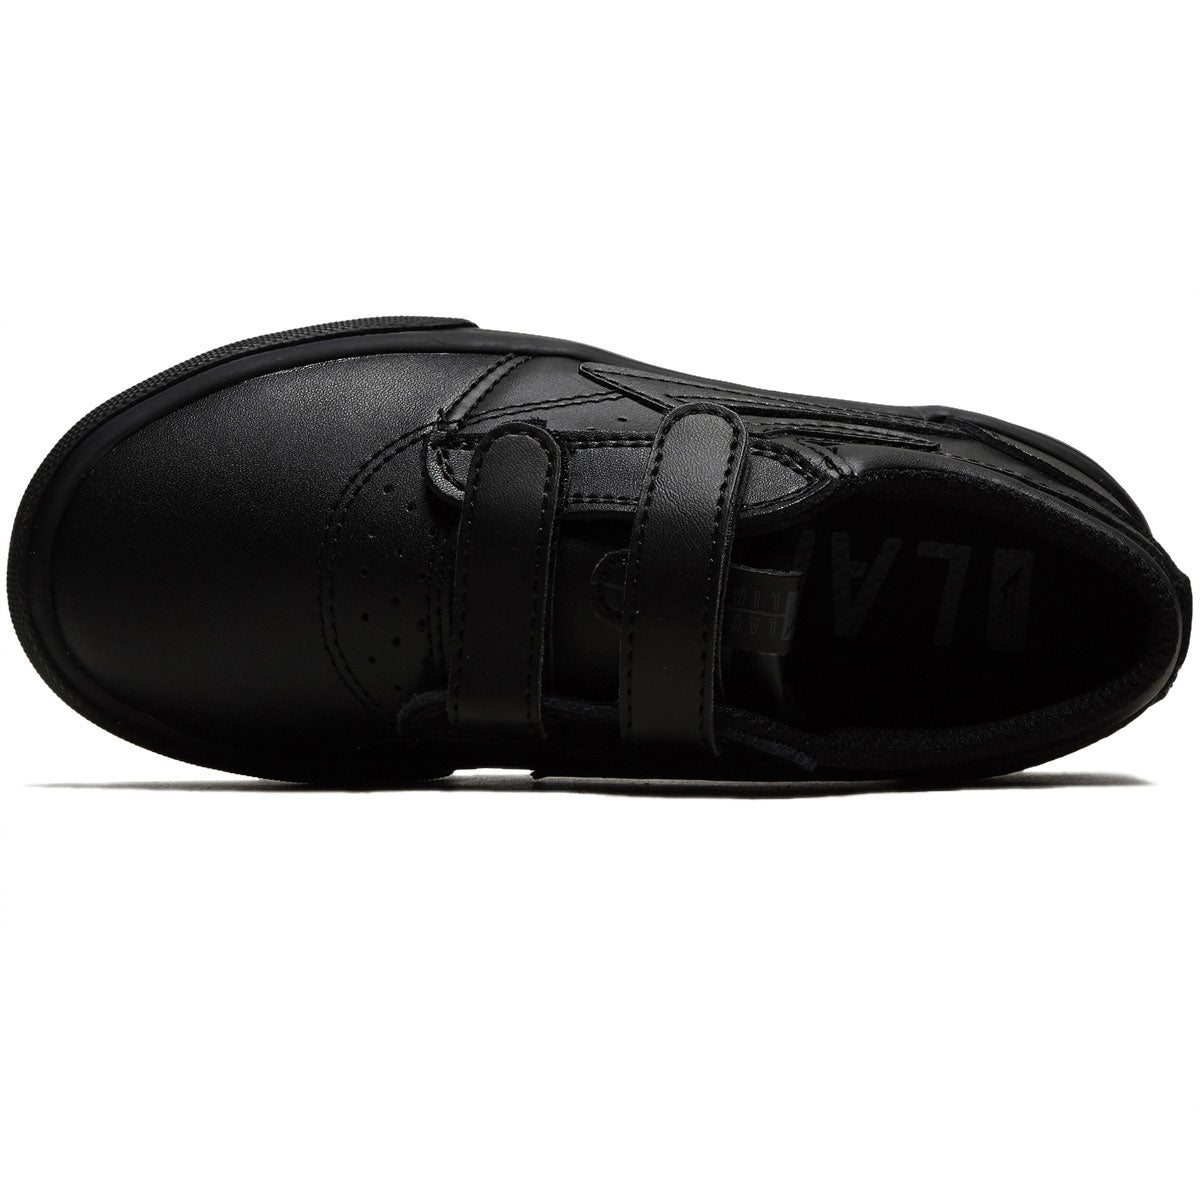 Lakai Youth Griffin Shoes - Black/Black Leather image 3